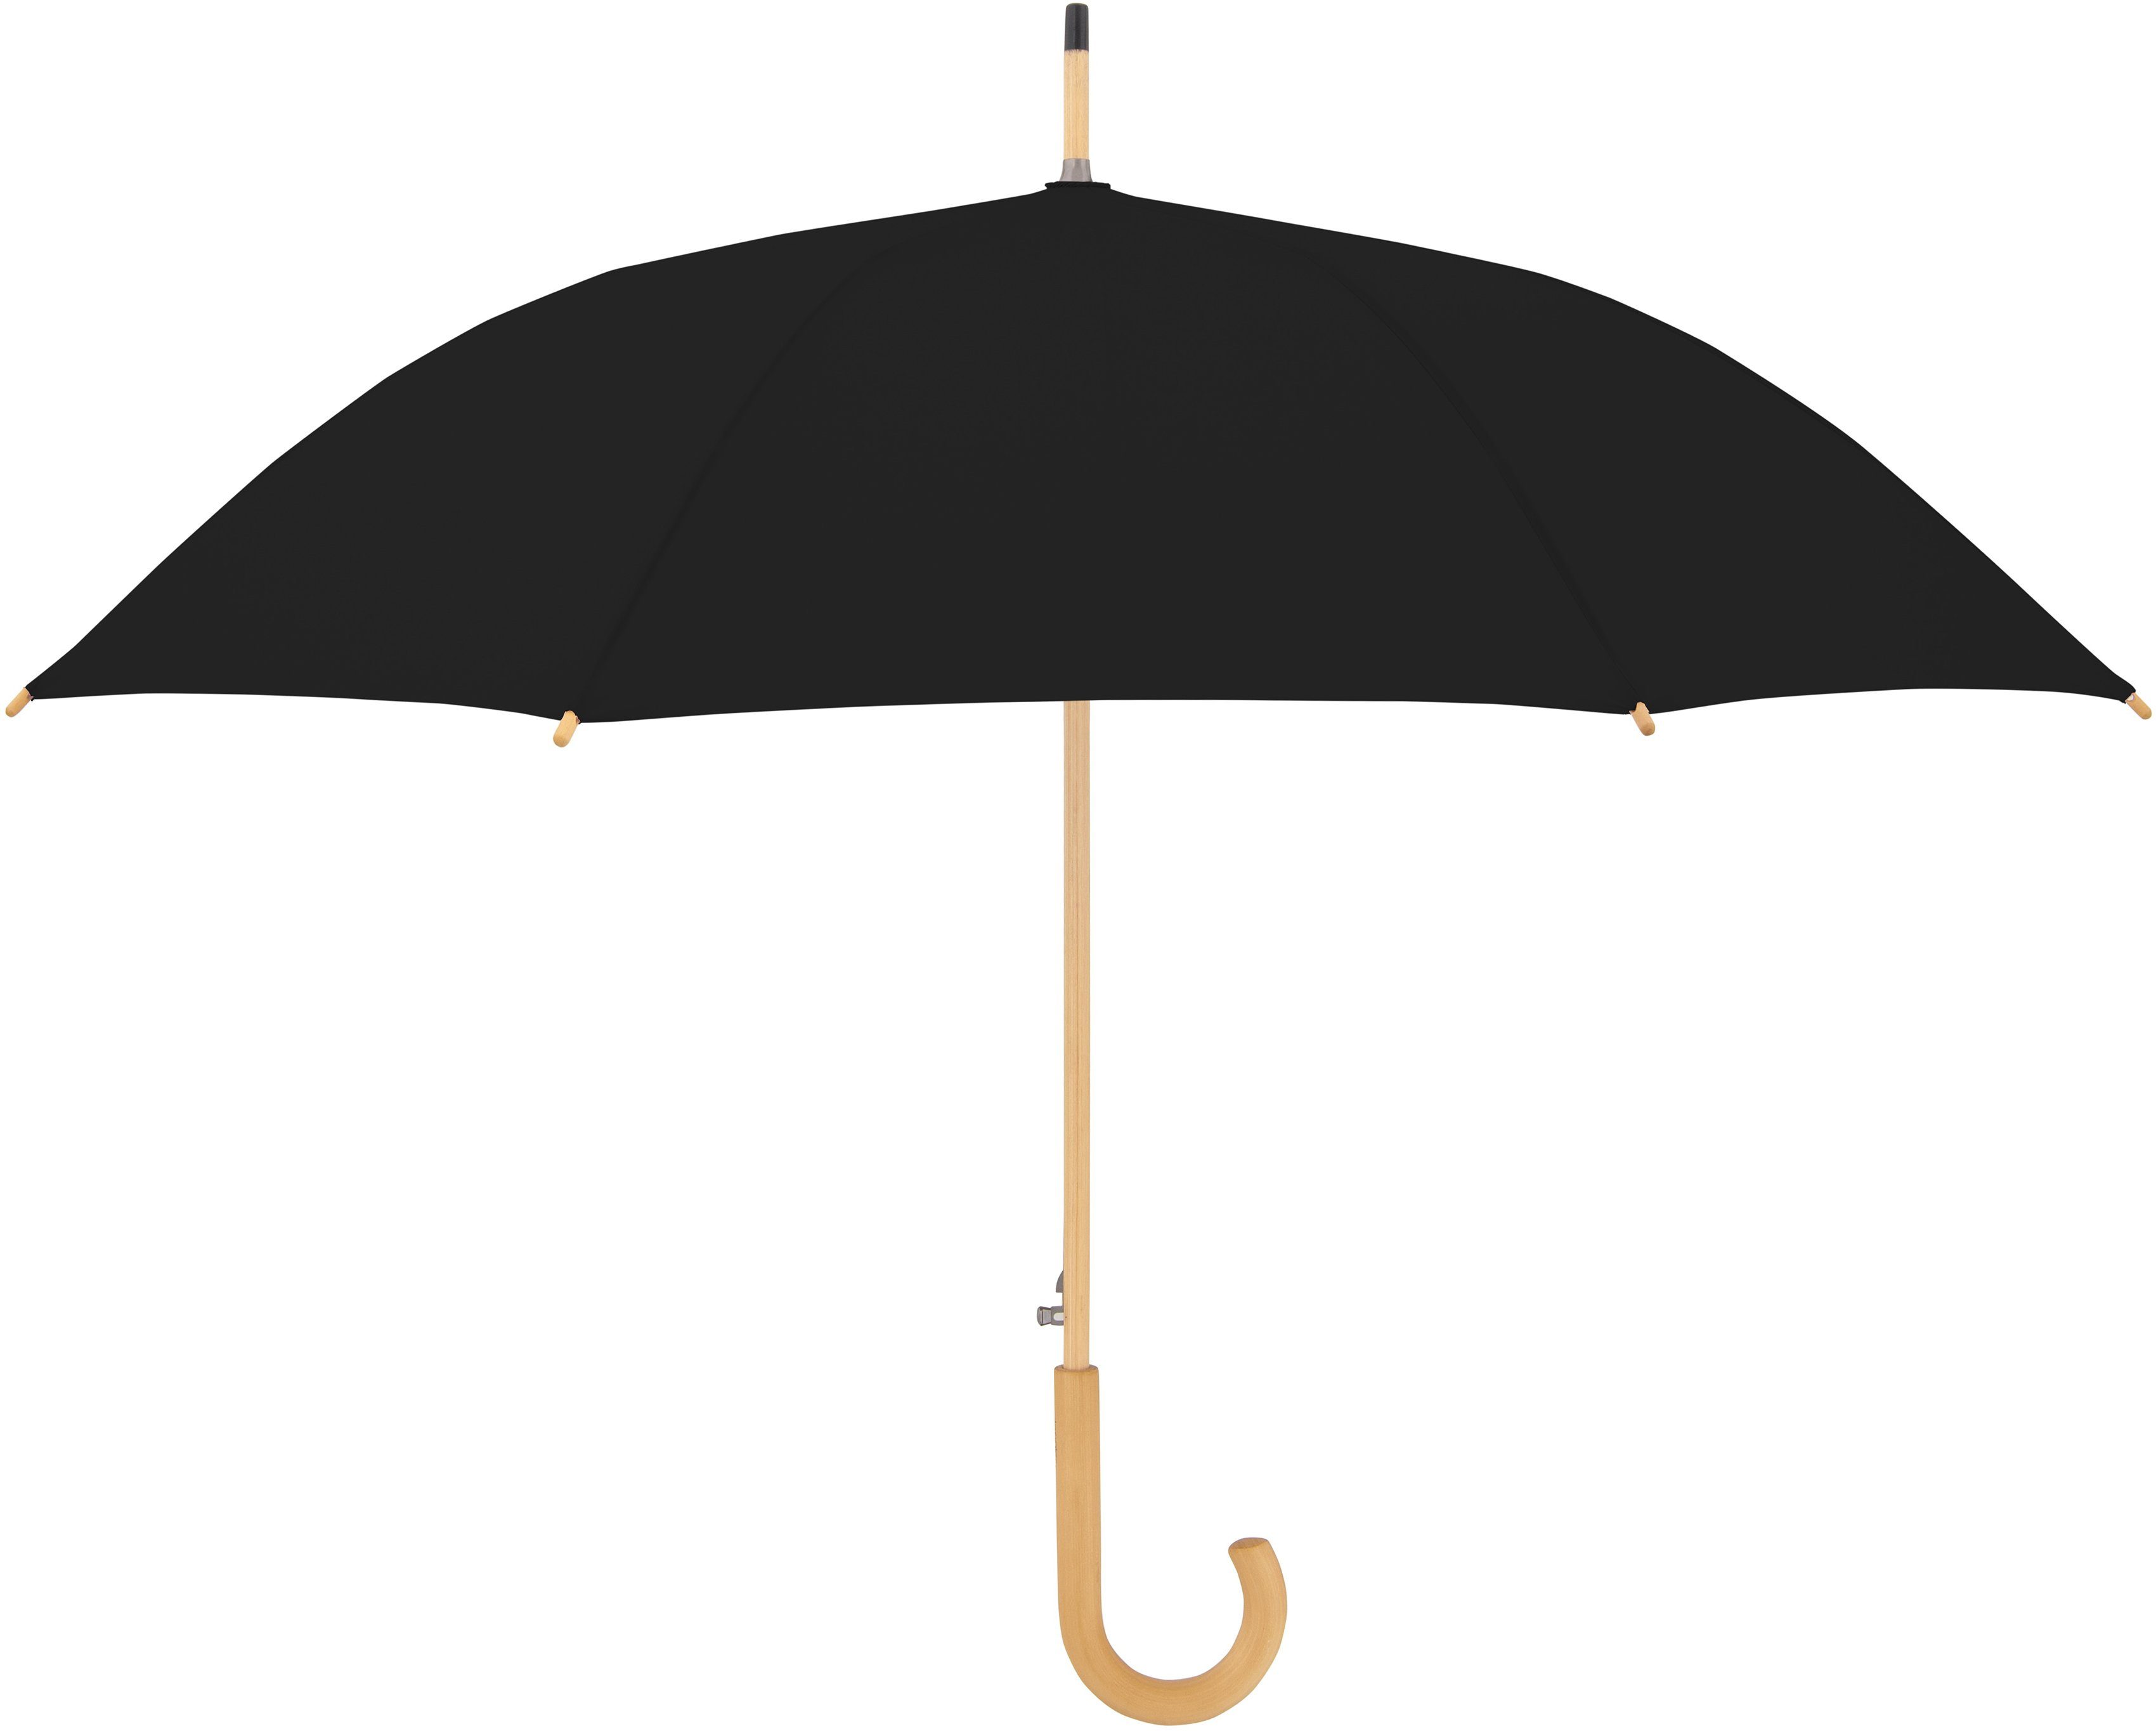 Stockregenschirm Material Holz aus doppler® Schirmgriff nature mit aus black, Long, simple recyceltem